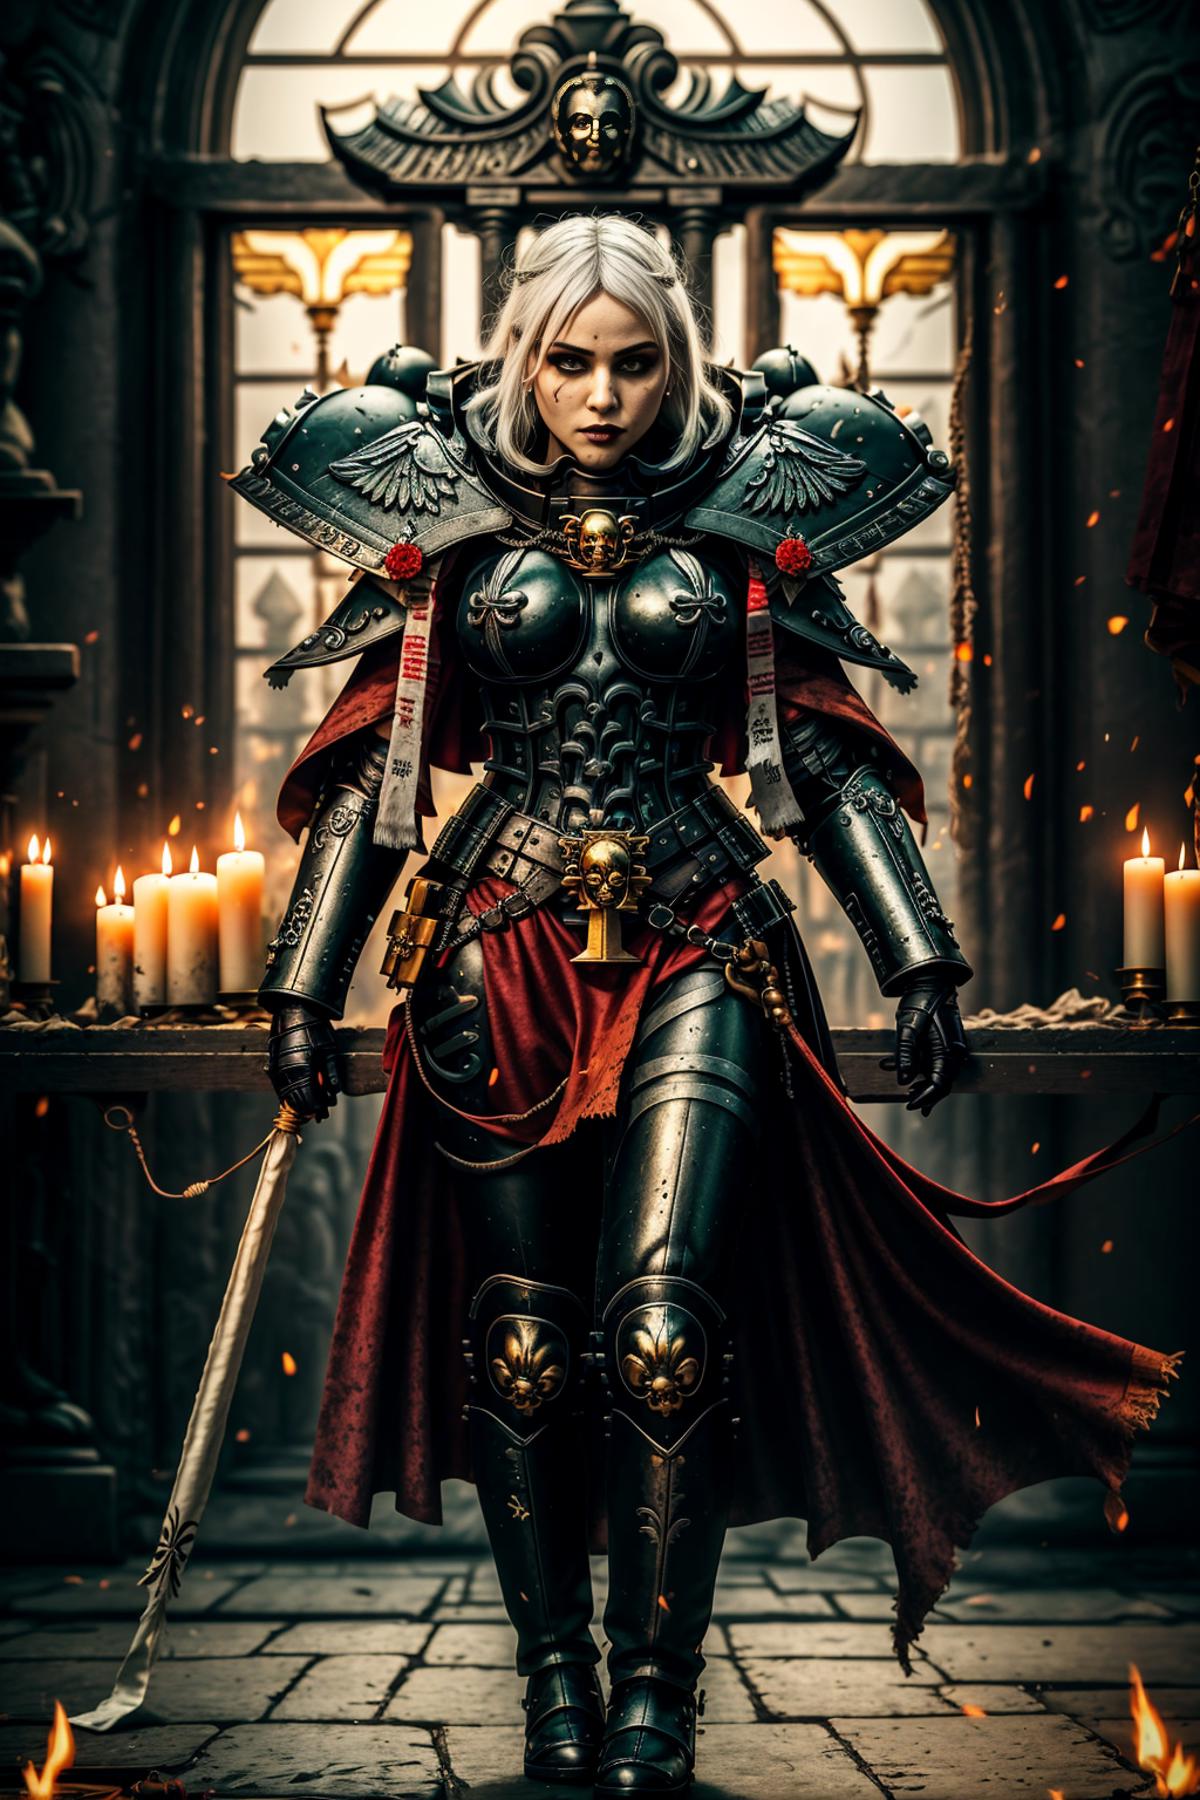 Warhammer 40K Adepta Sororitas Sister of Battle armor - by EDG image by Dubos